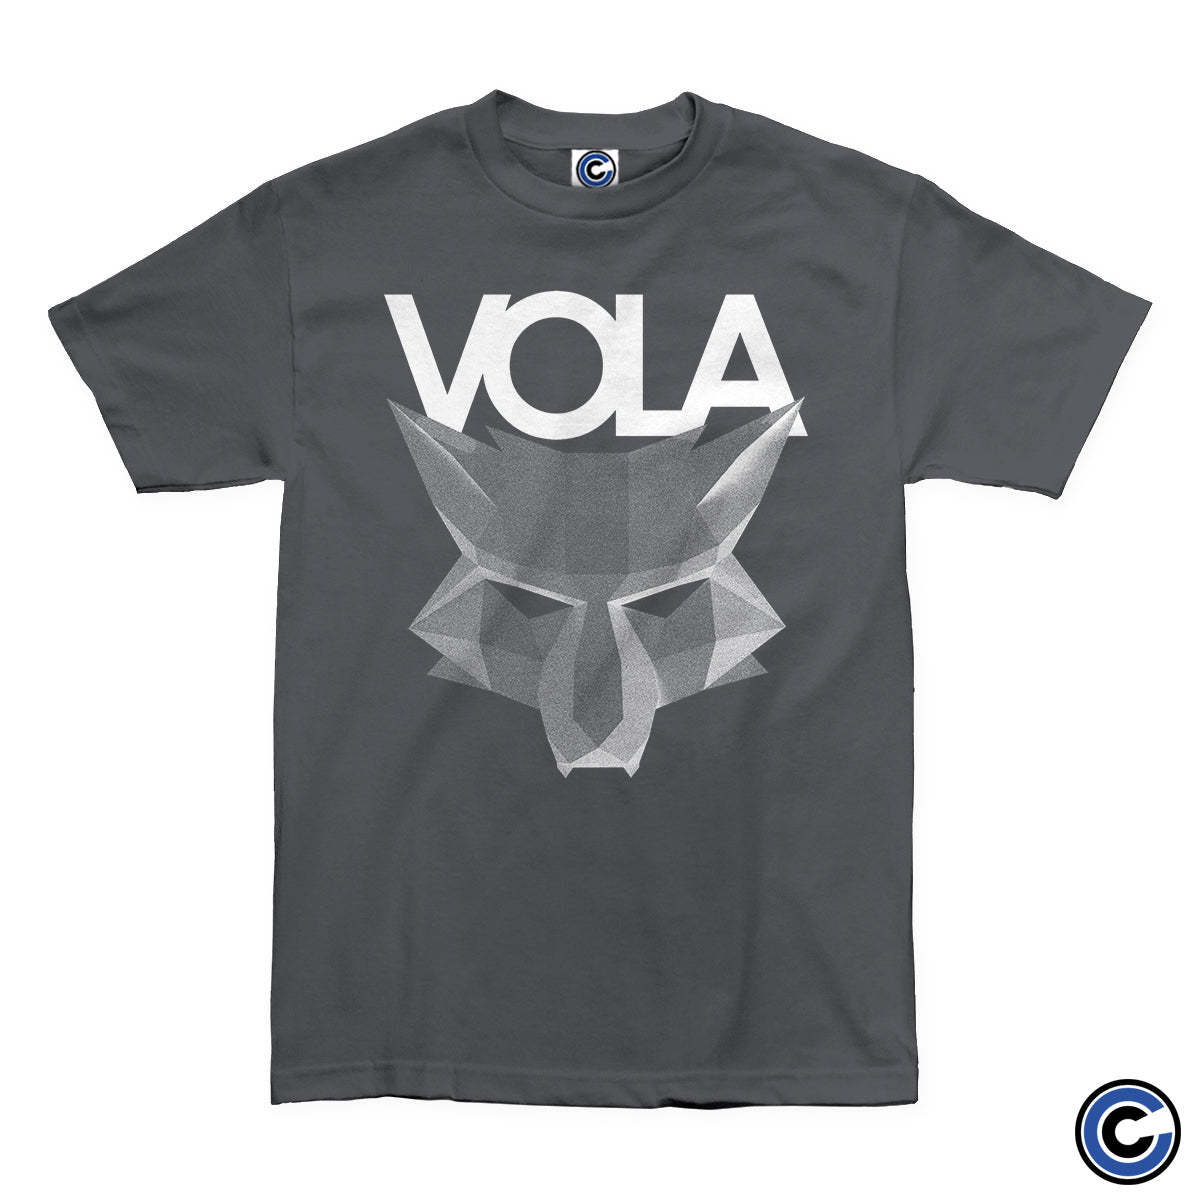 Vola "Paper Wolf" Shirt